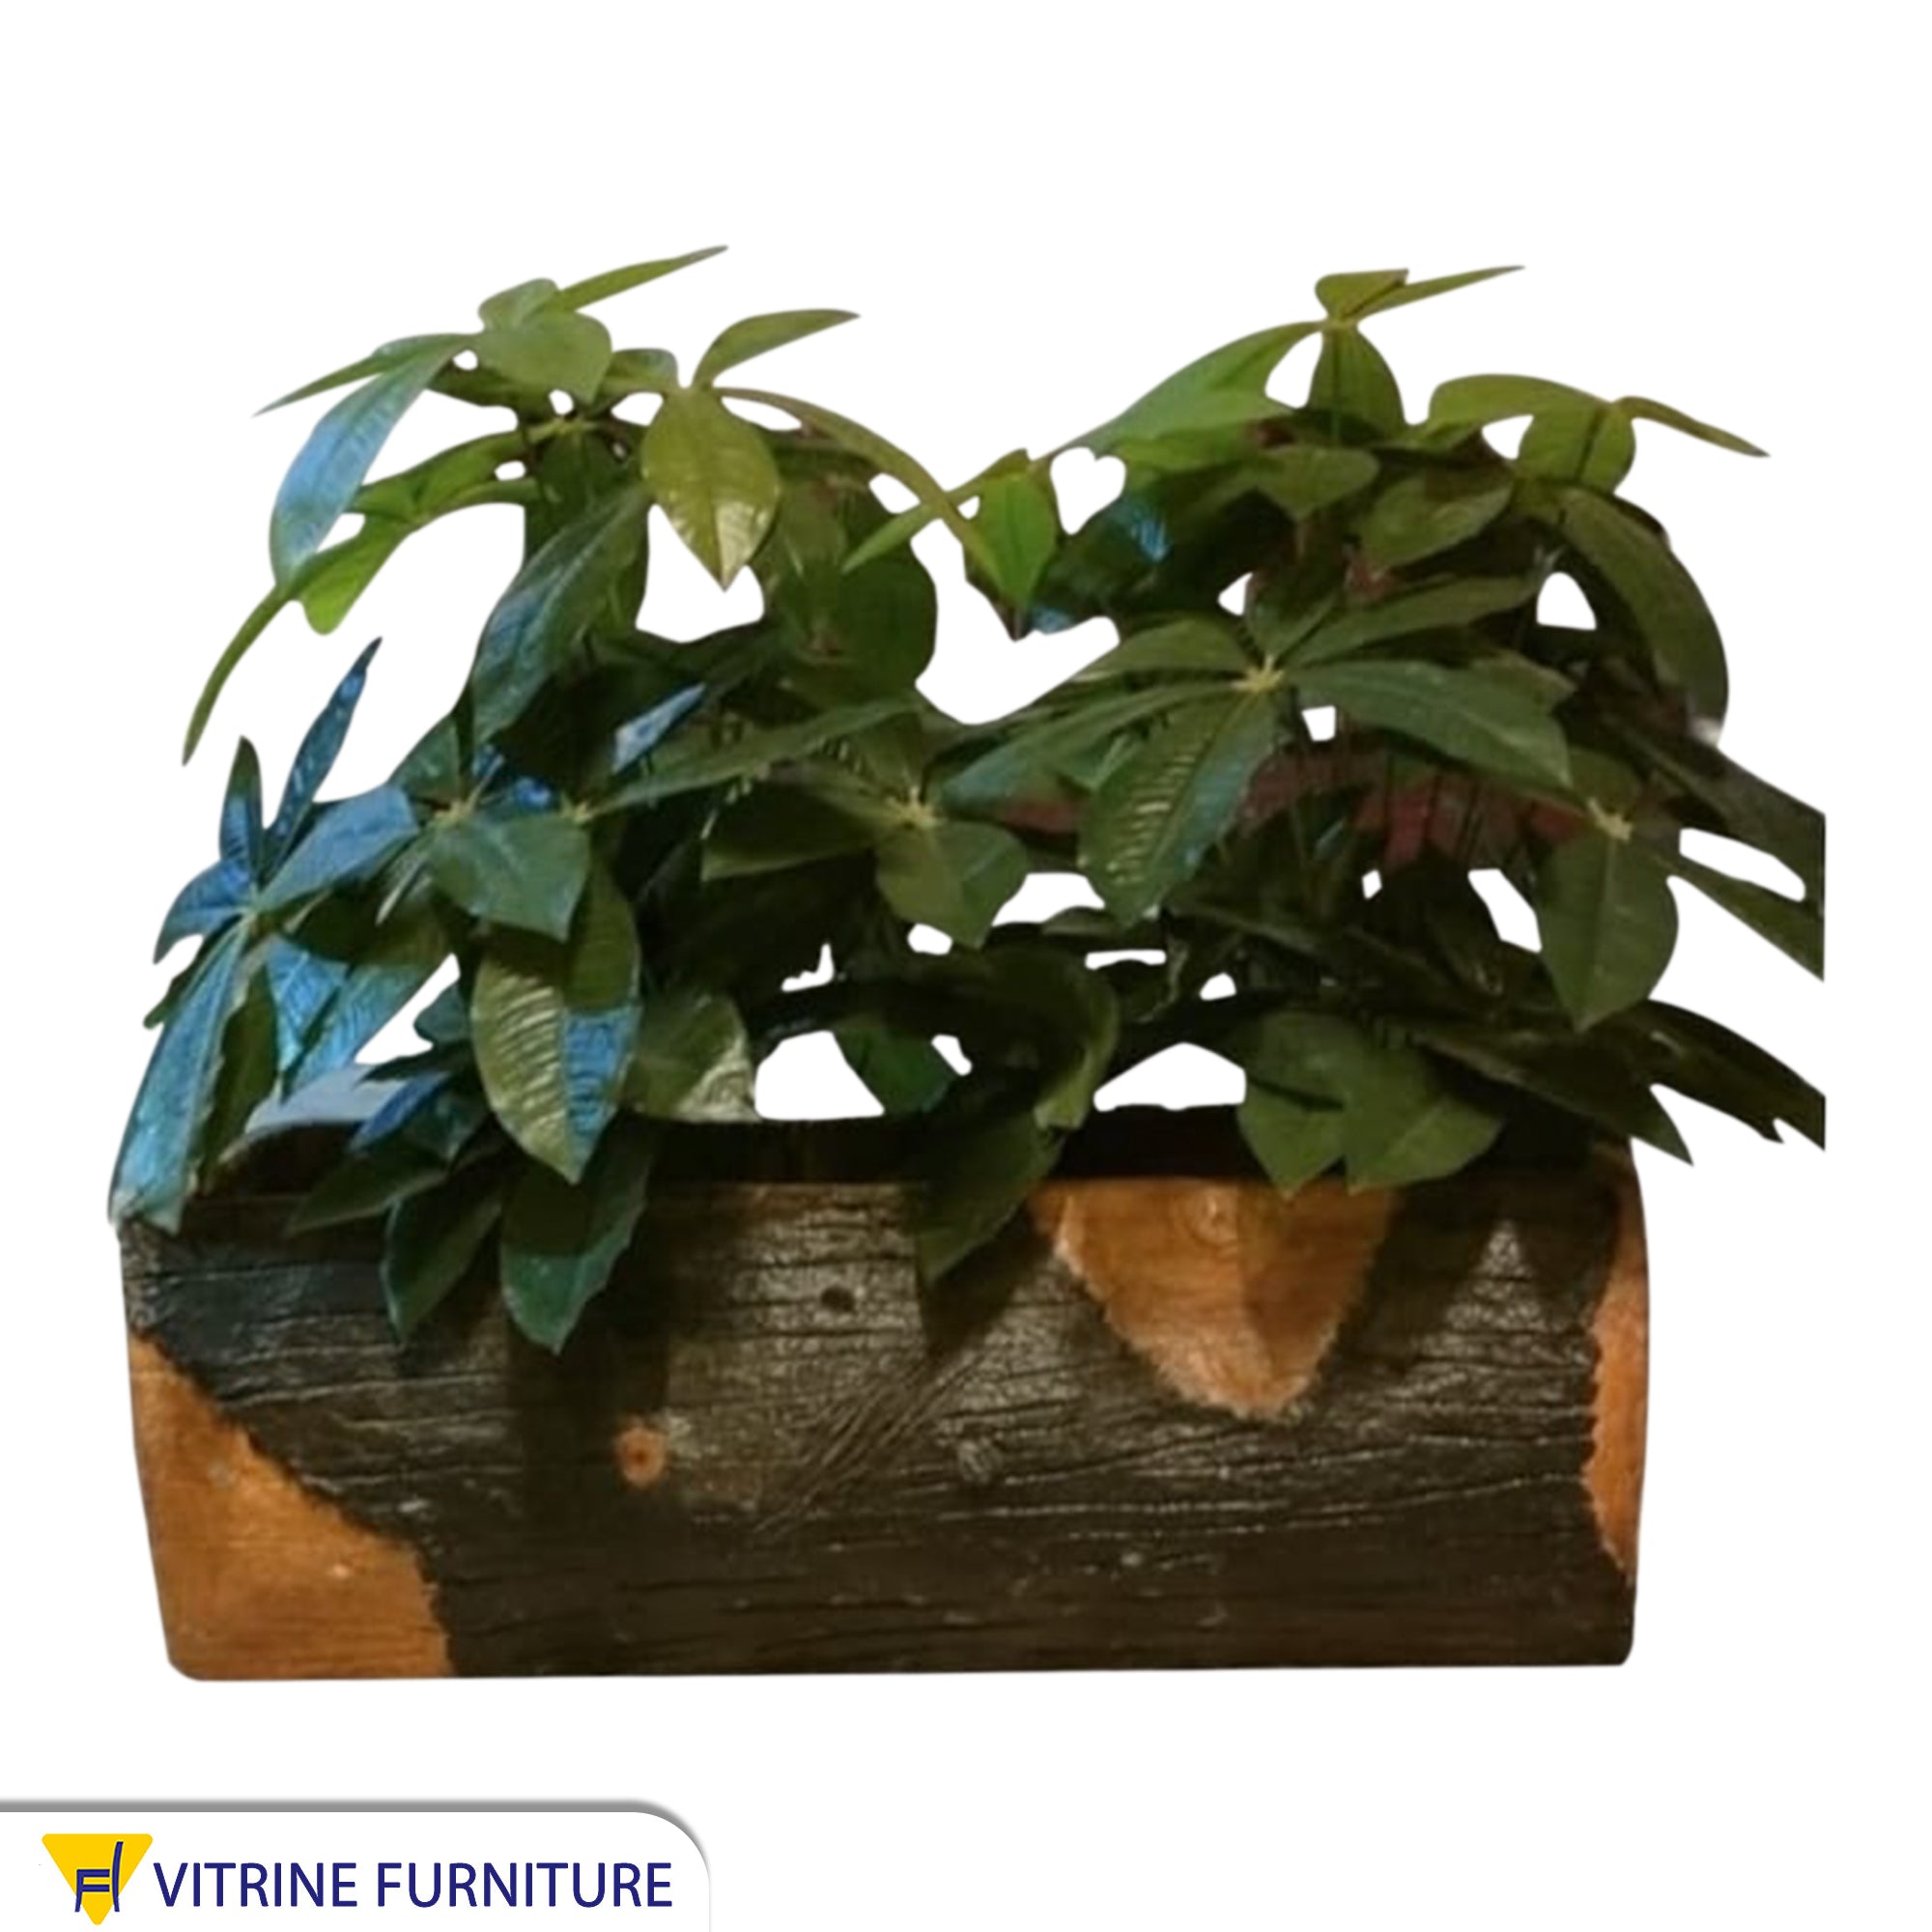 Rectangular decorative artificial plant pot